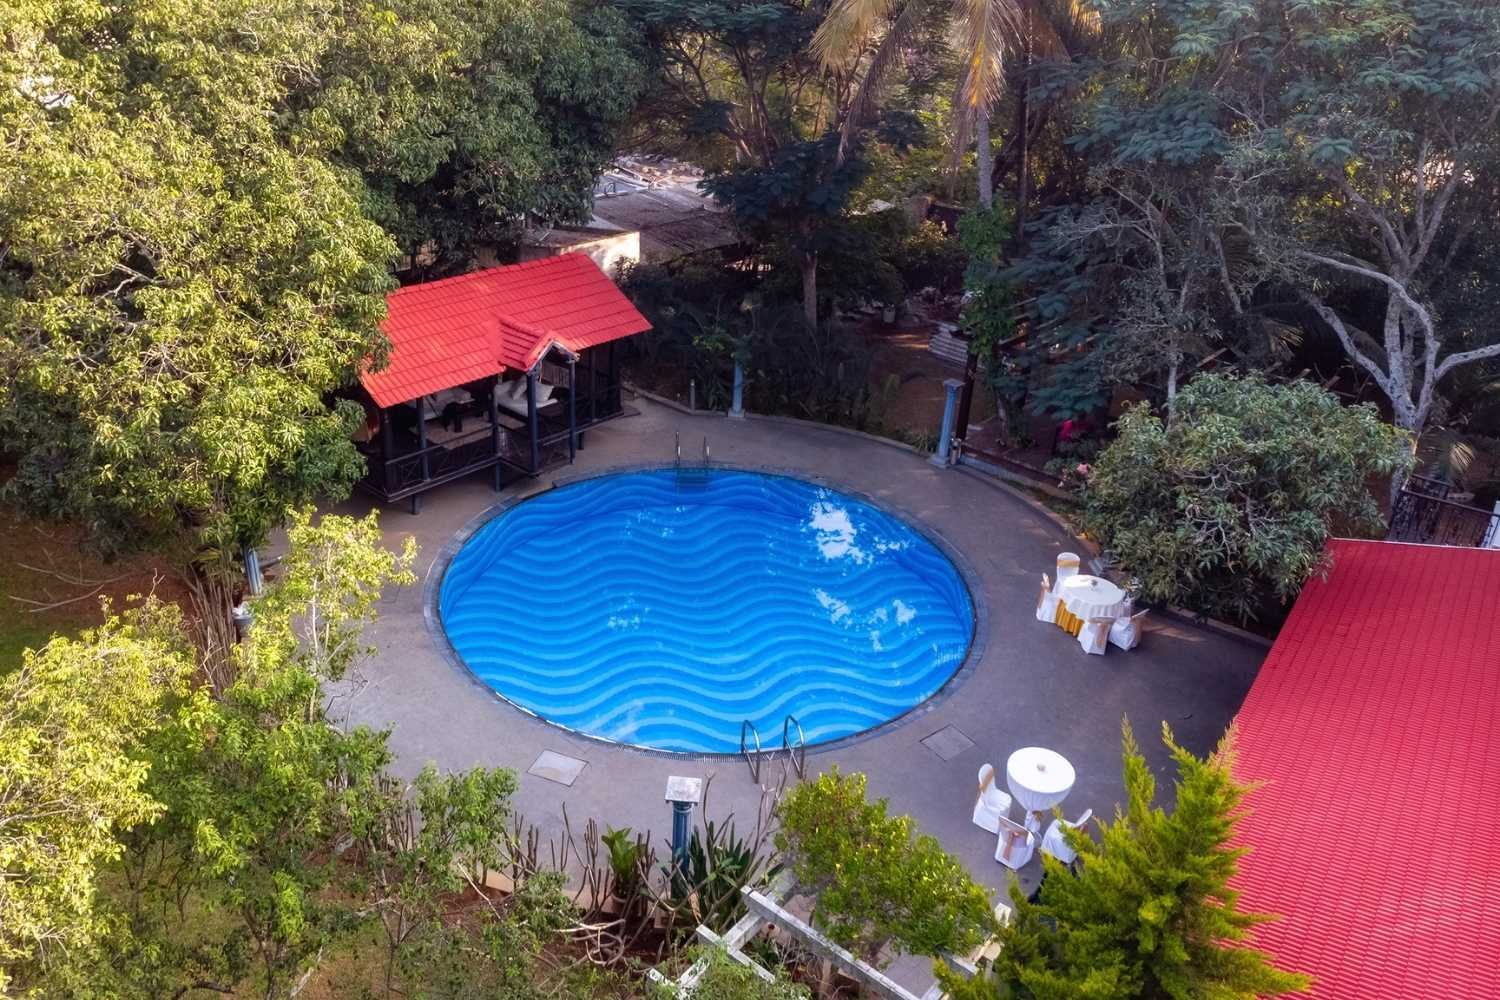 Poolside area at LE Roma Gardenia, a hotel wedding venue in Bangalore